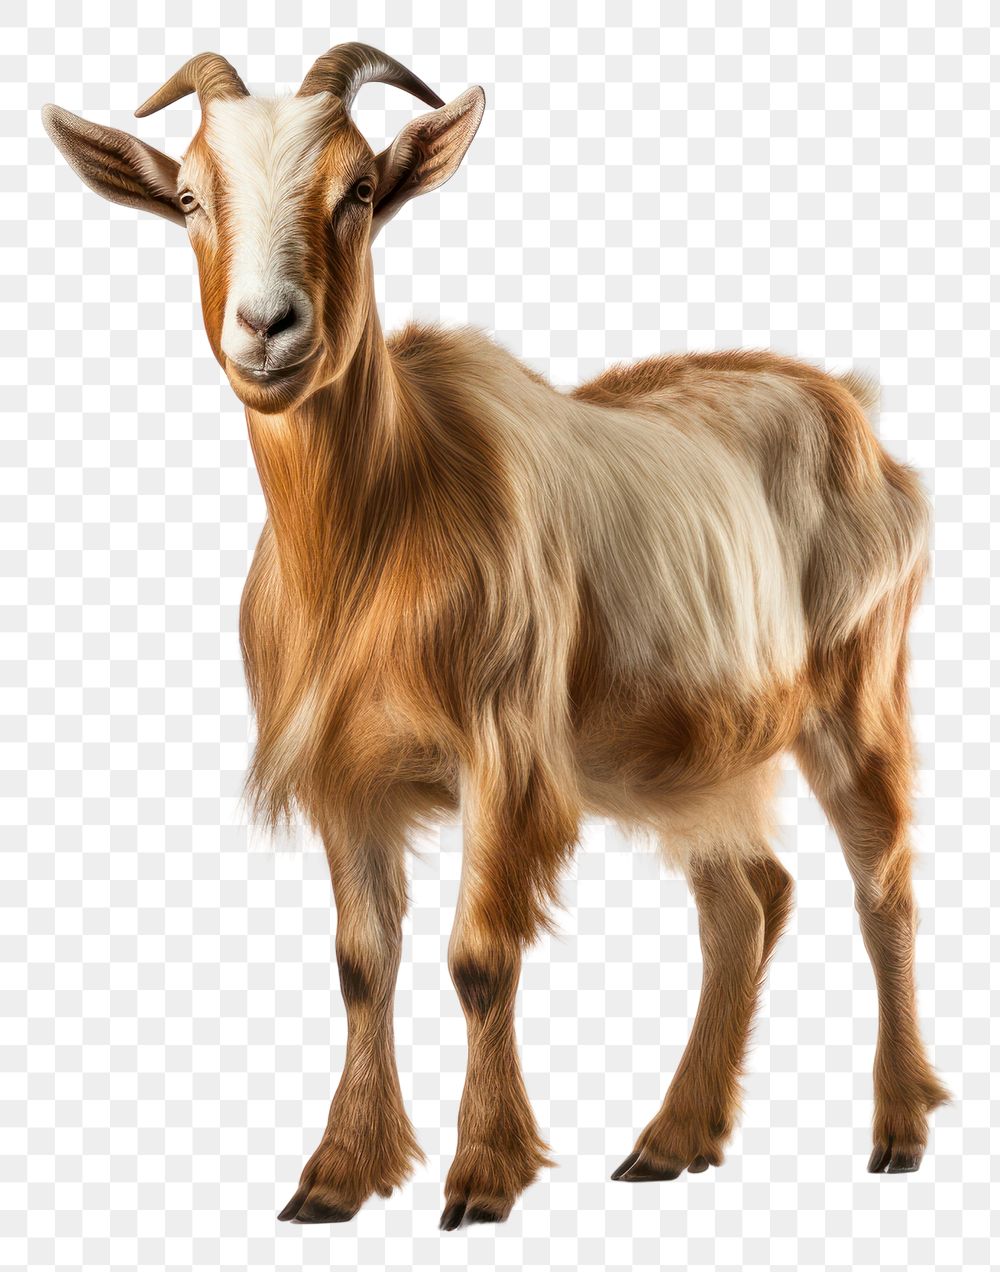 PNG Goat livestock wildlife animal | Premium PNG - rawpixel